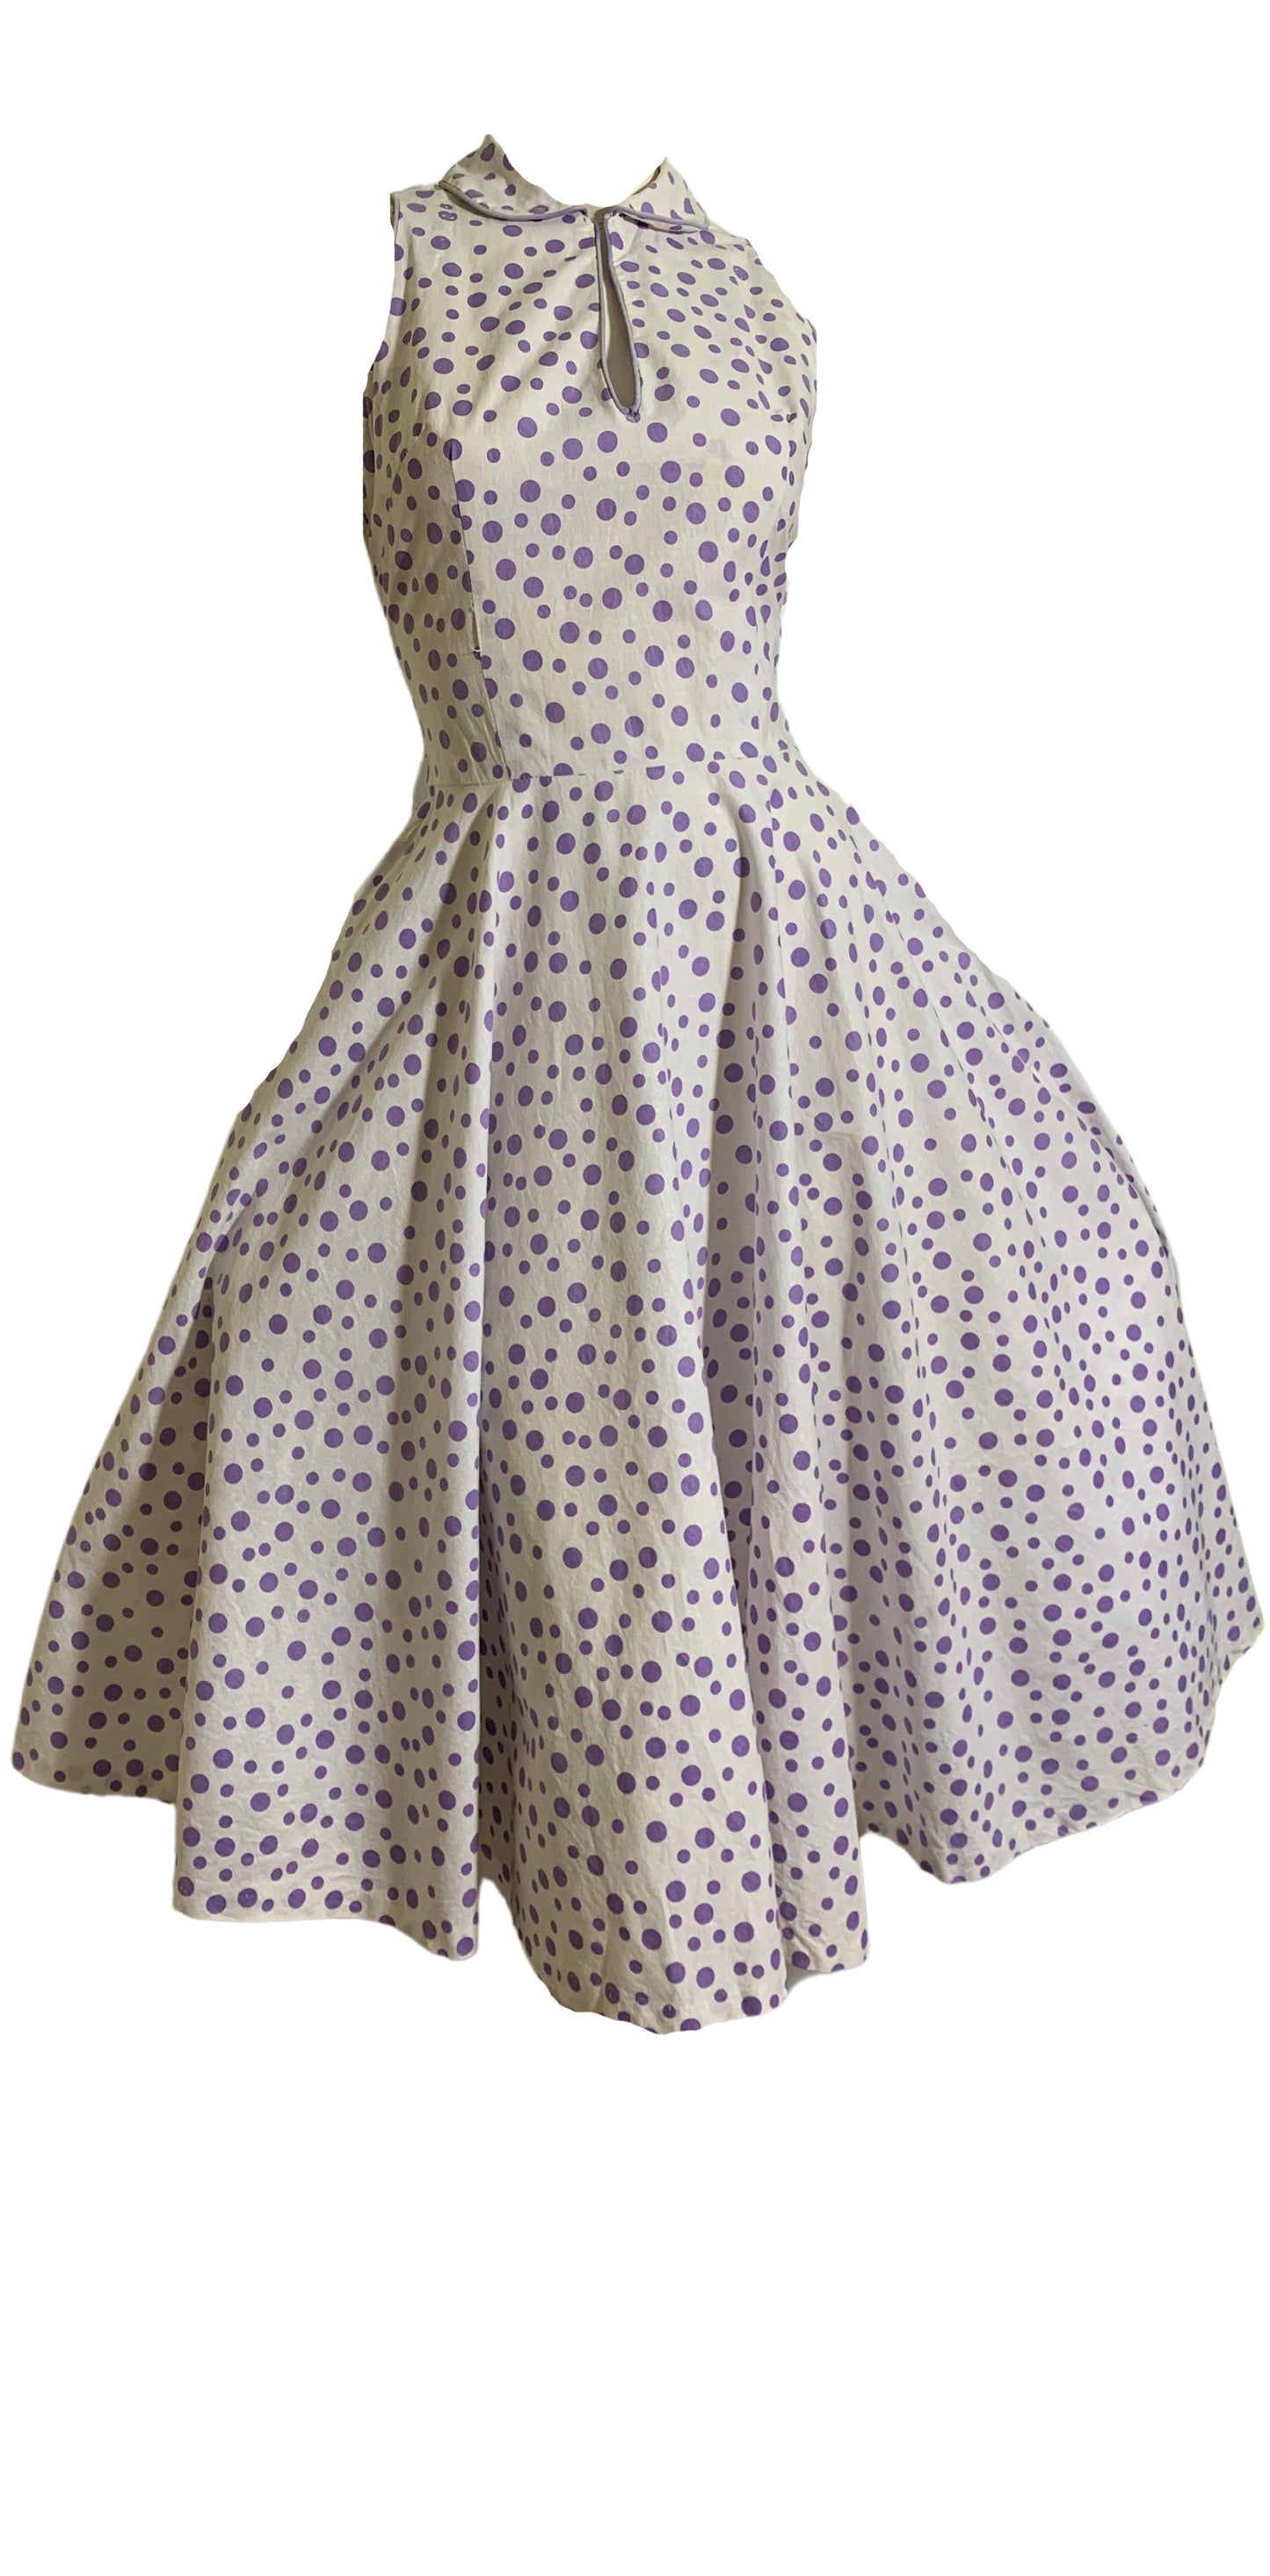 Lavender Polka Dot Sleeveless Circle Skirt Dress circa 1940s